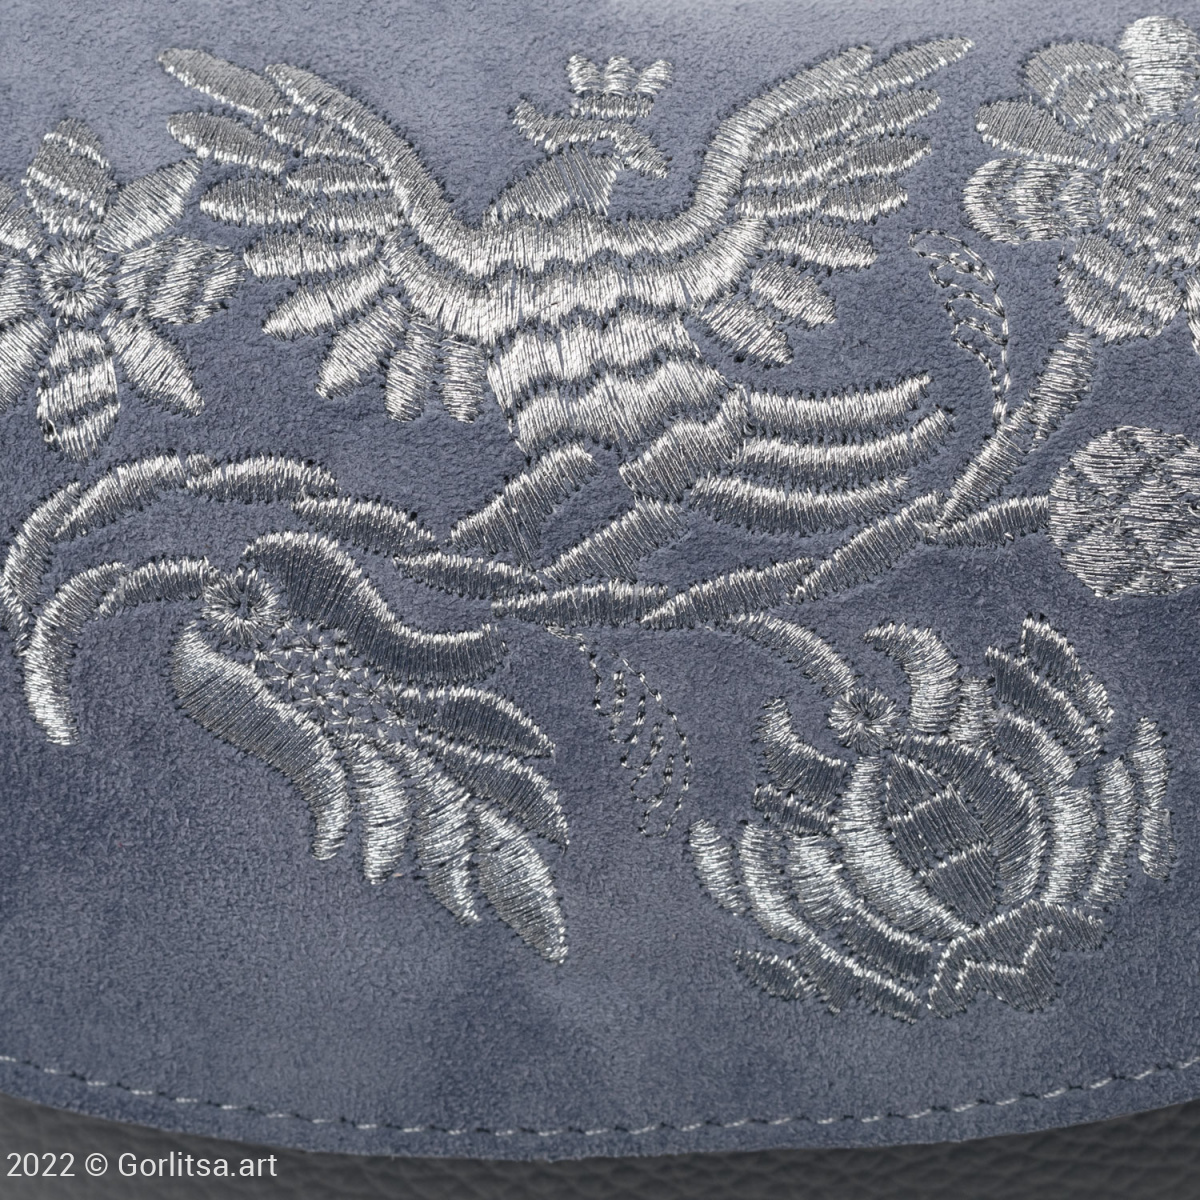 Сумка кожаная «Вещая птица» 1082/62026-15, серый / серебро нат. кожа Горлица-арт фото 4